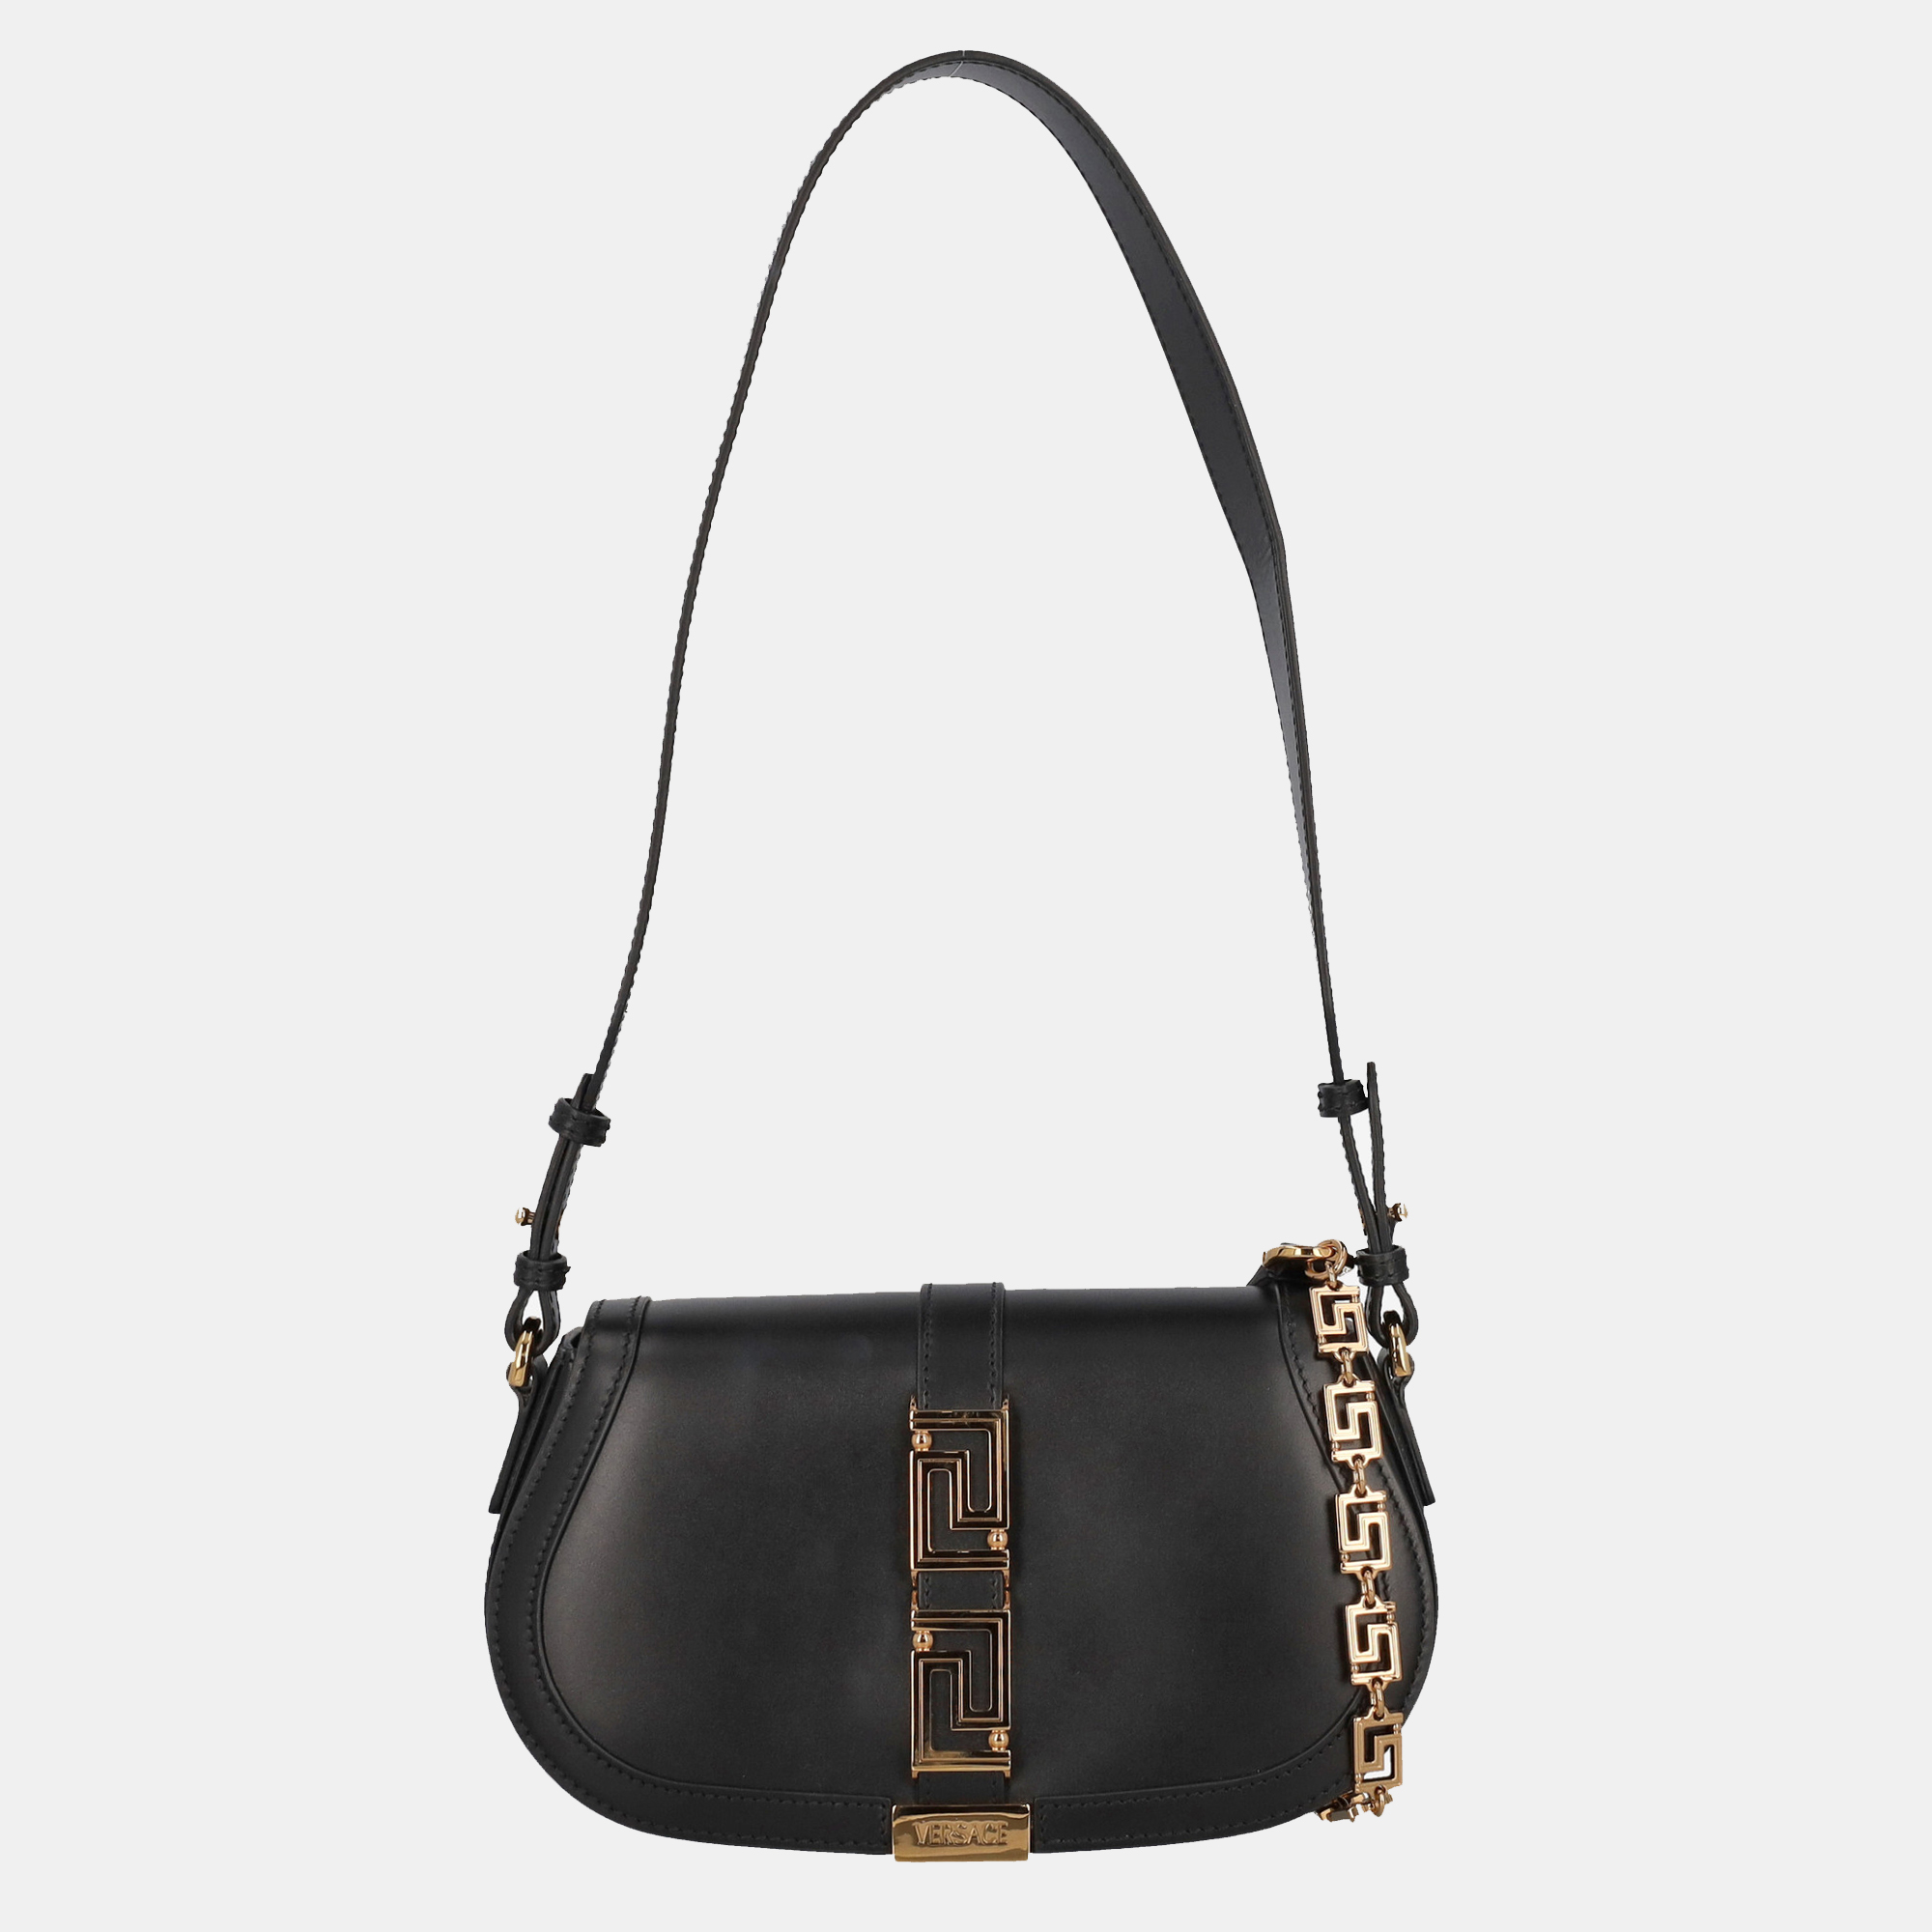 Versace  Women's Leather Cross Body Bag - Black - One Size